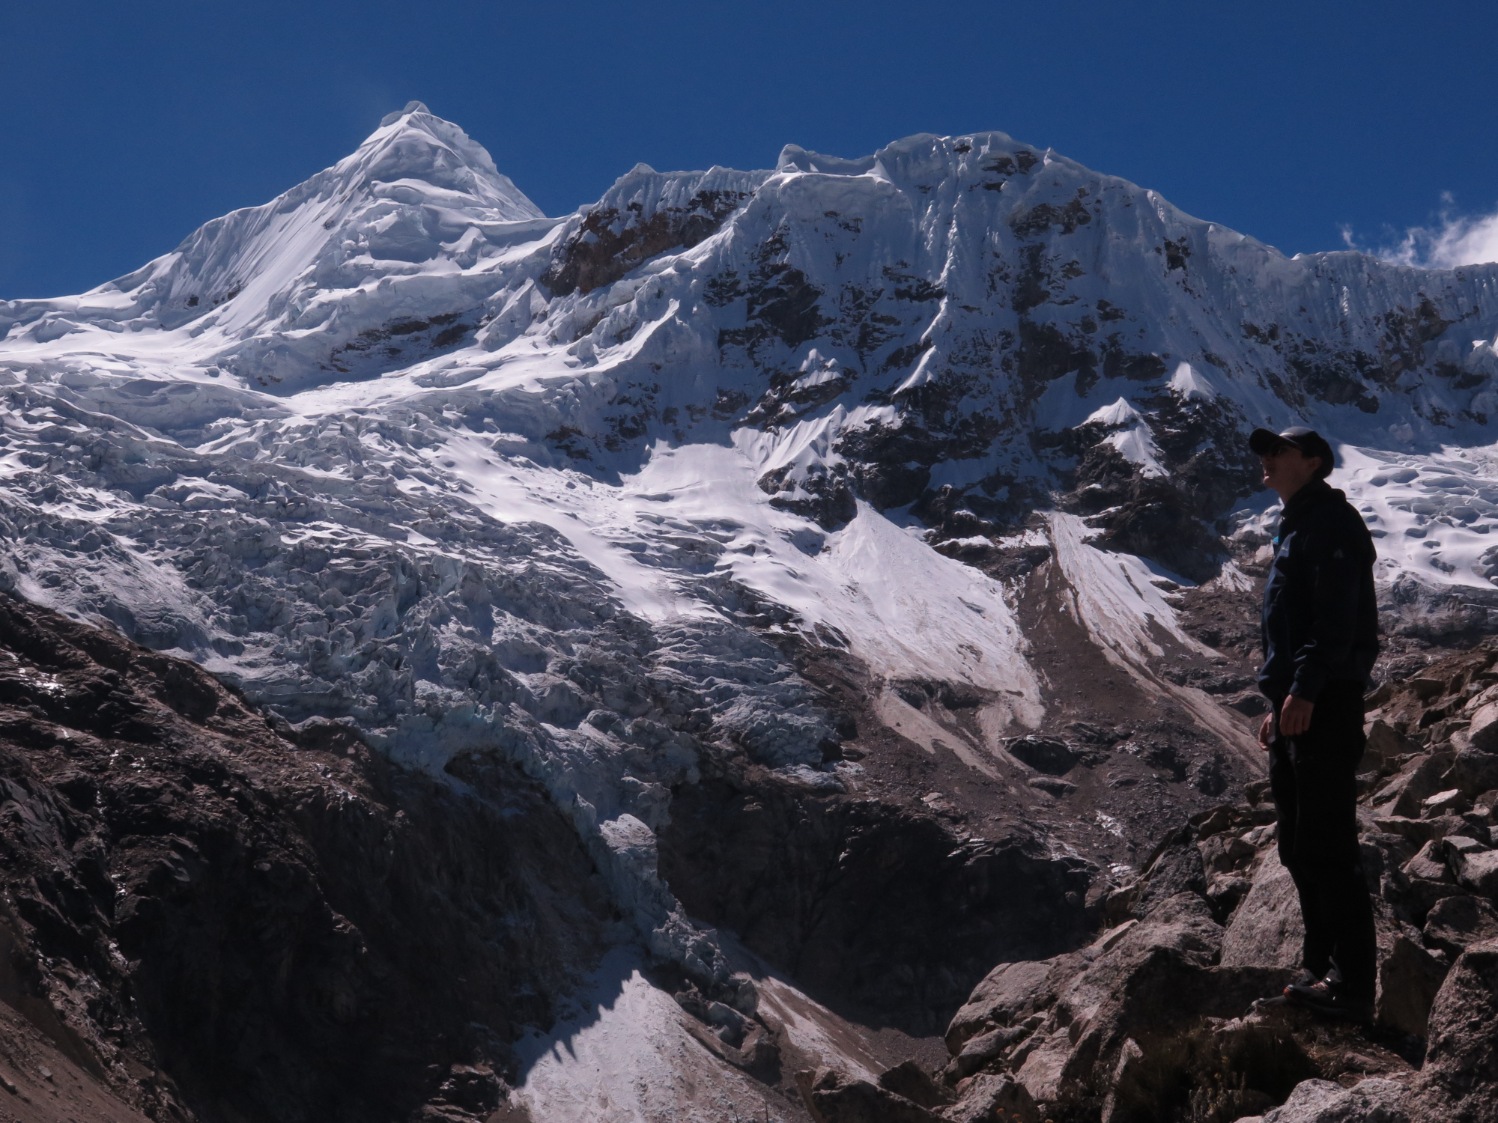 Peru's Cordillera Blanca mountain range